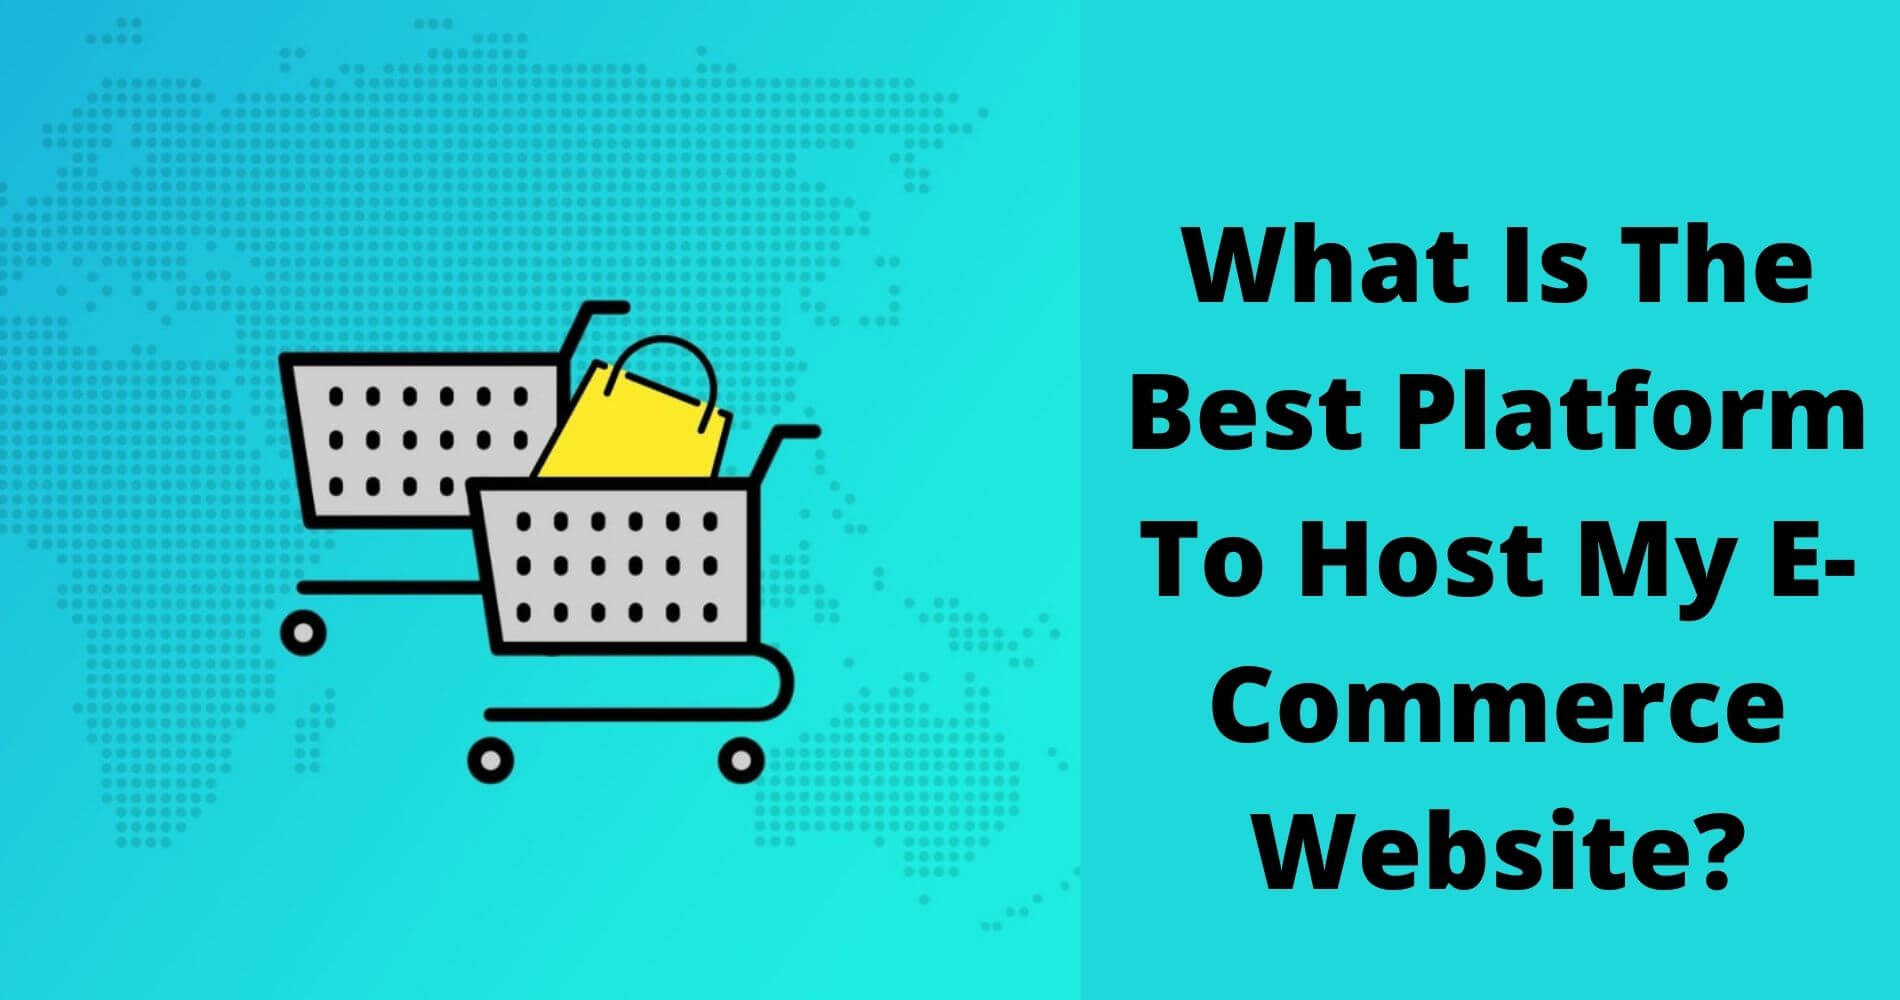 Best Platform To Host My E-Commerce Website